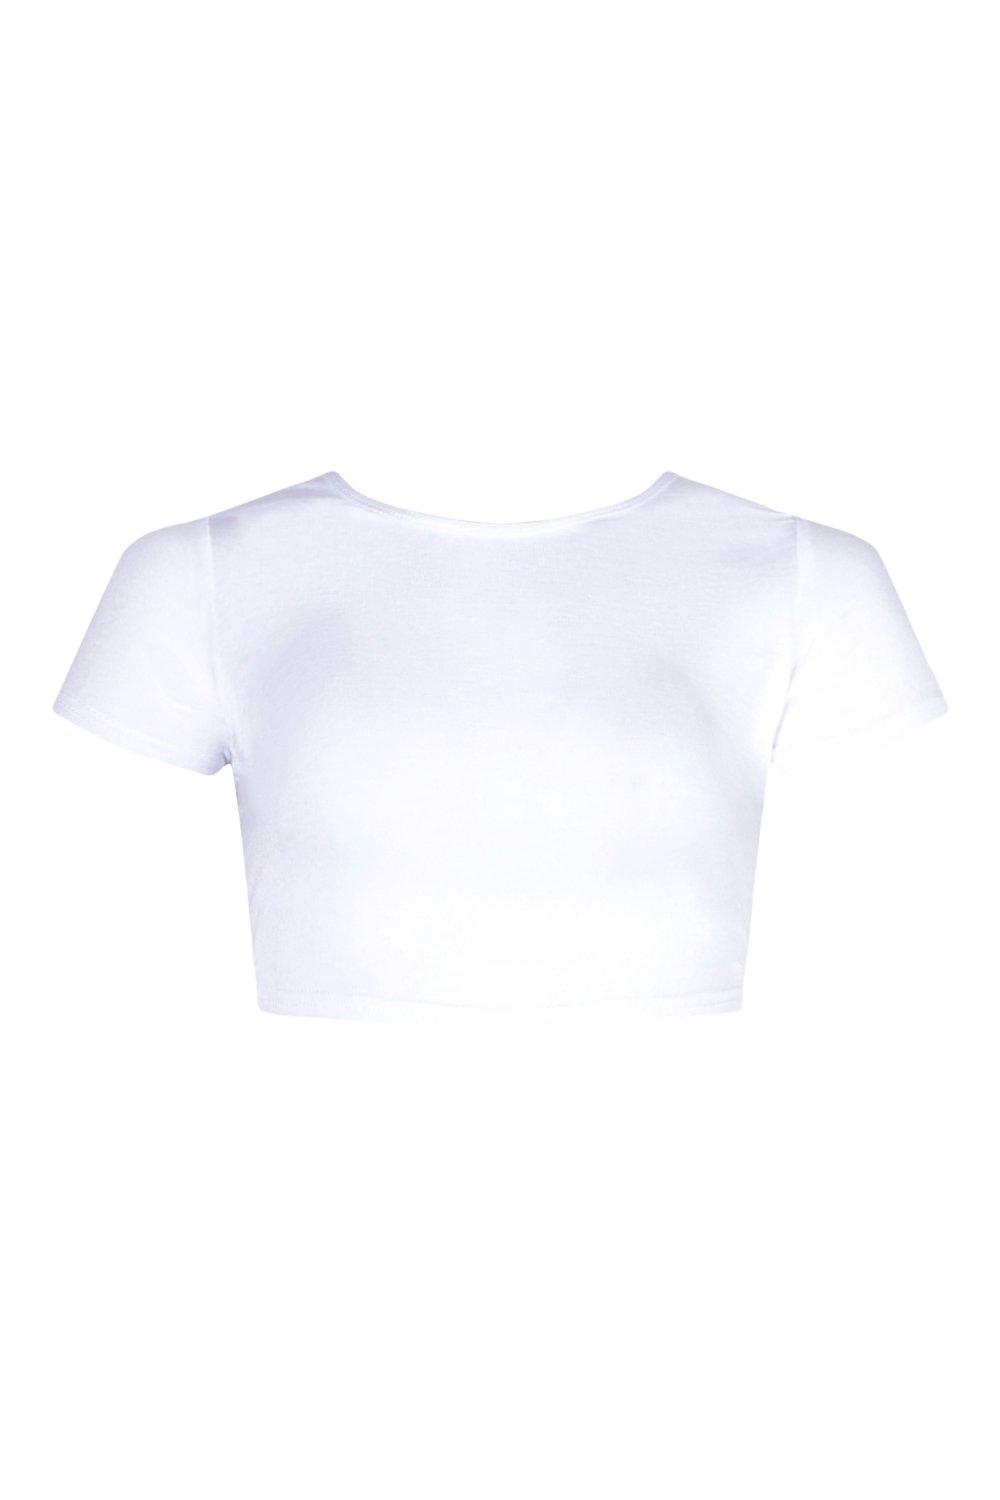 White Basic Short Sleeve Crop Top